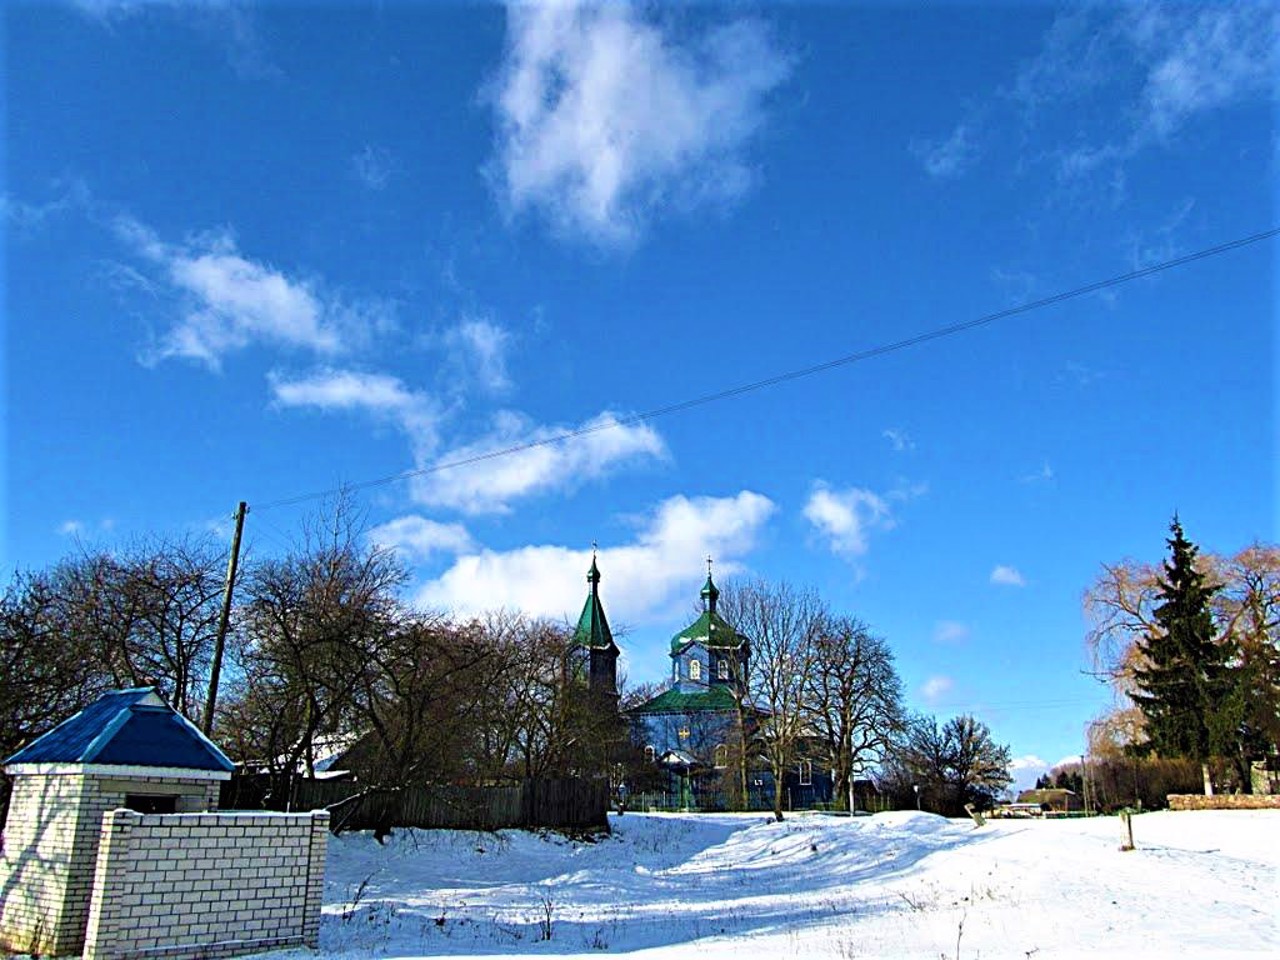 Staryi Solotvyn village